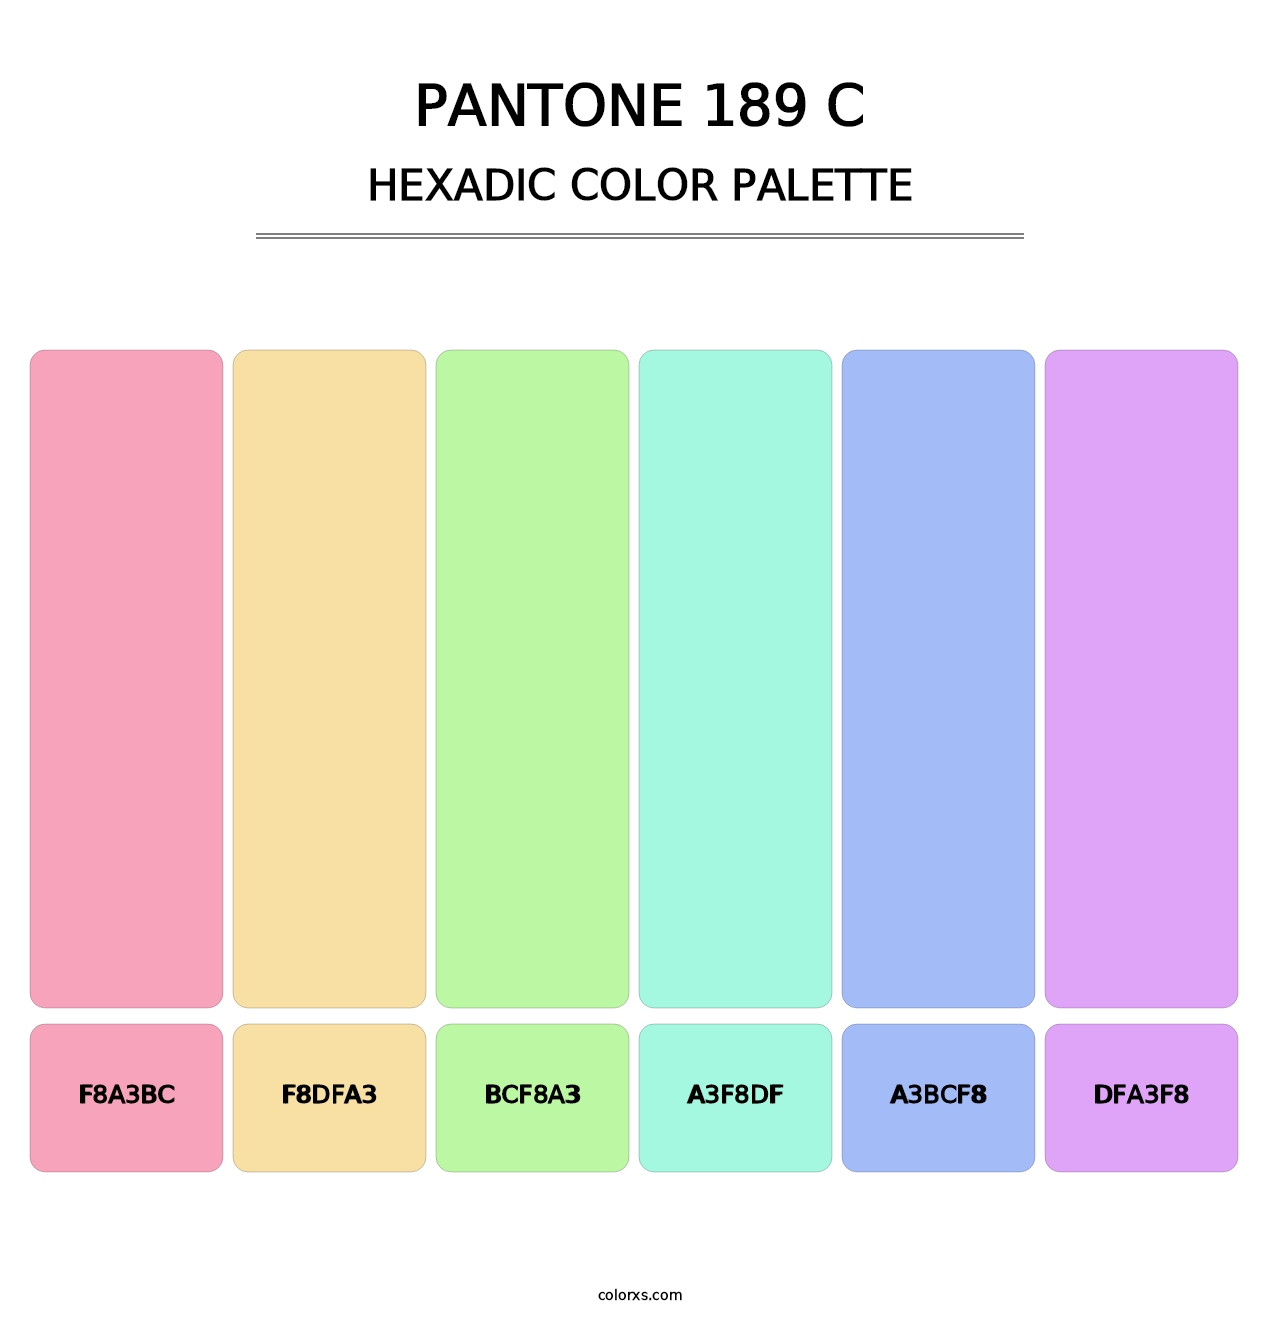 PANTONE 189 C - Hexadic Color Palette